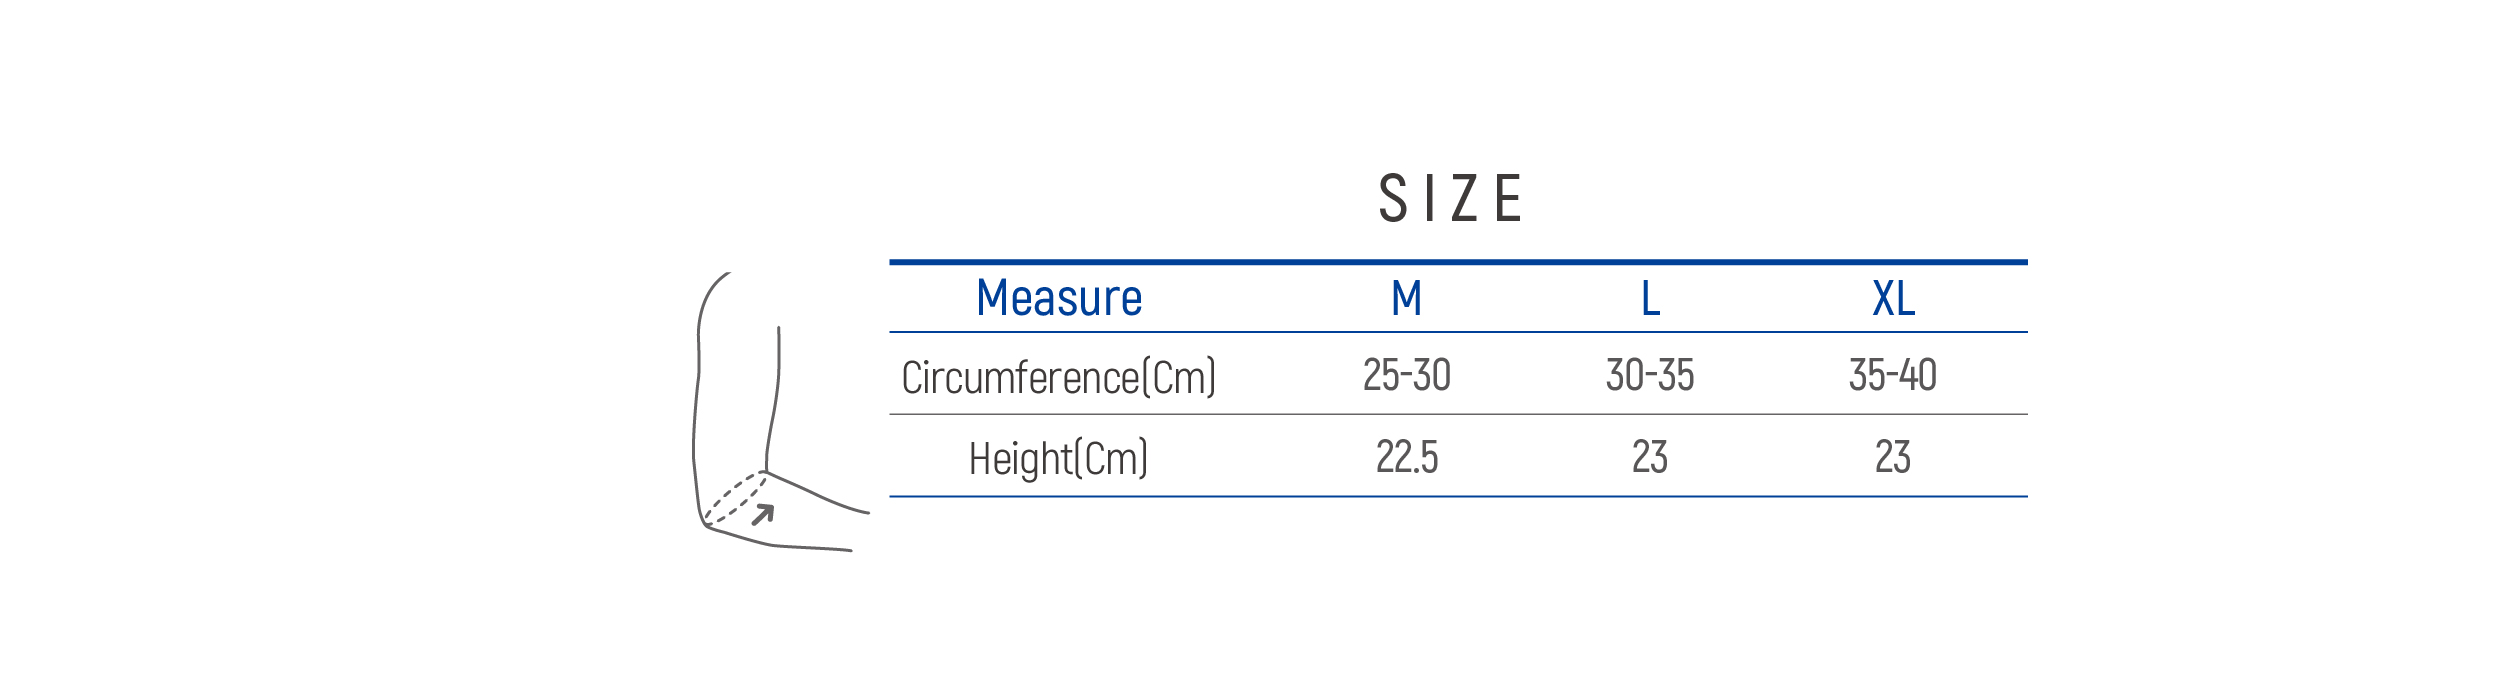 DR-E092 Size table image